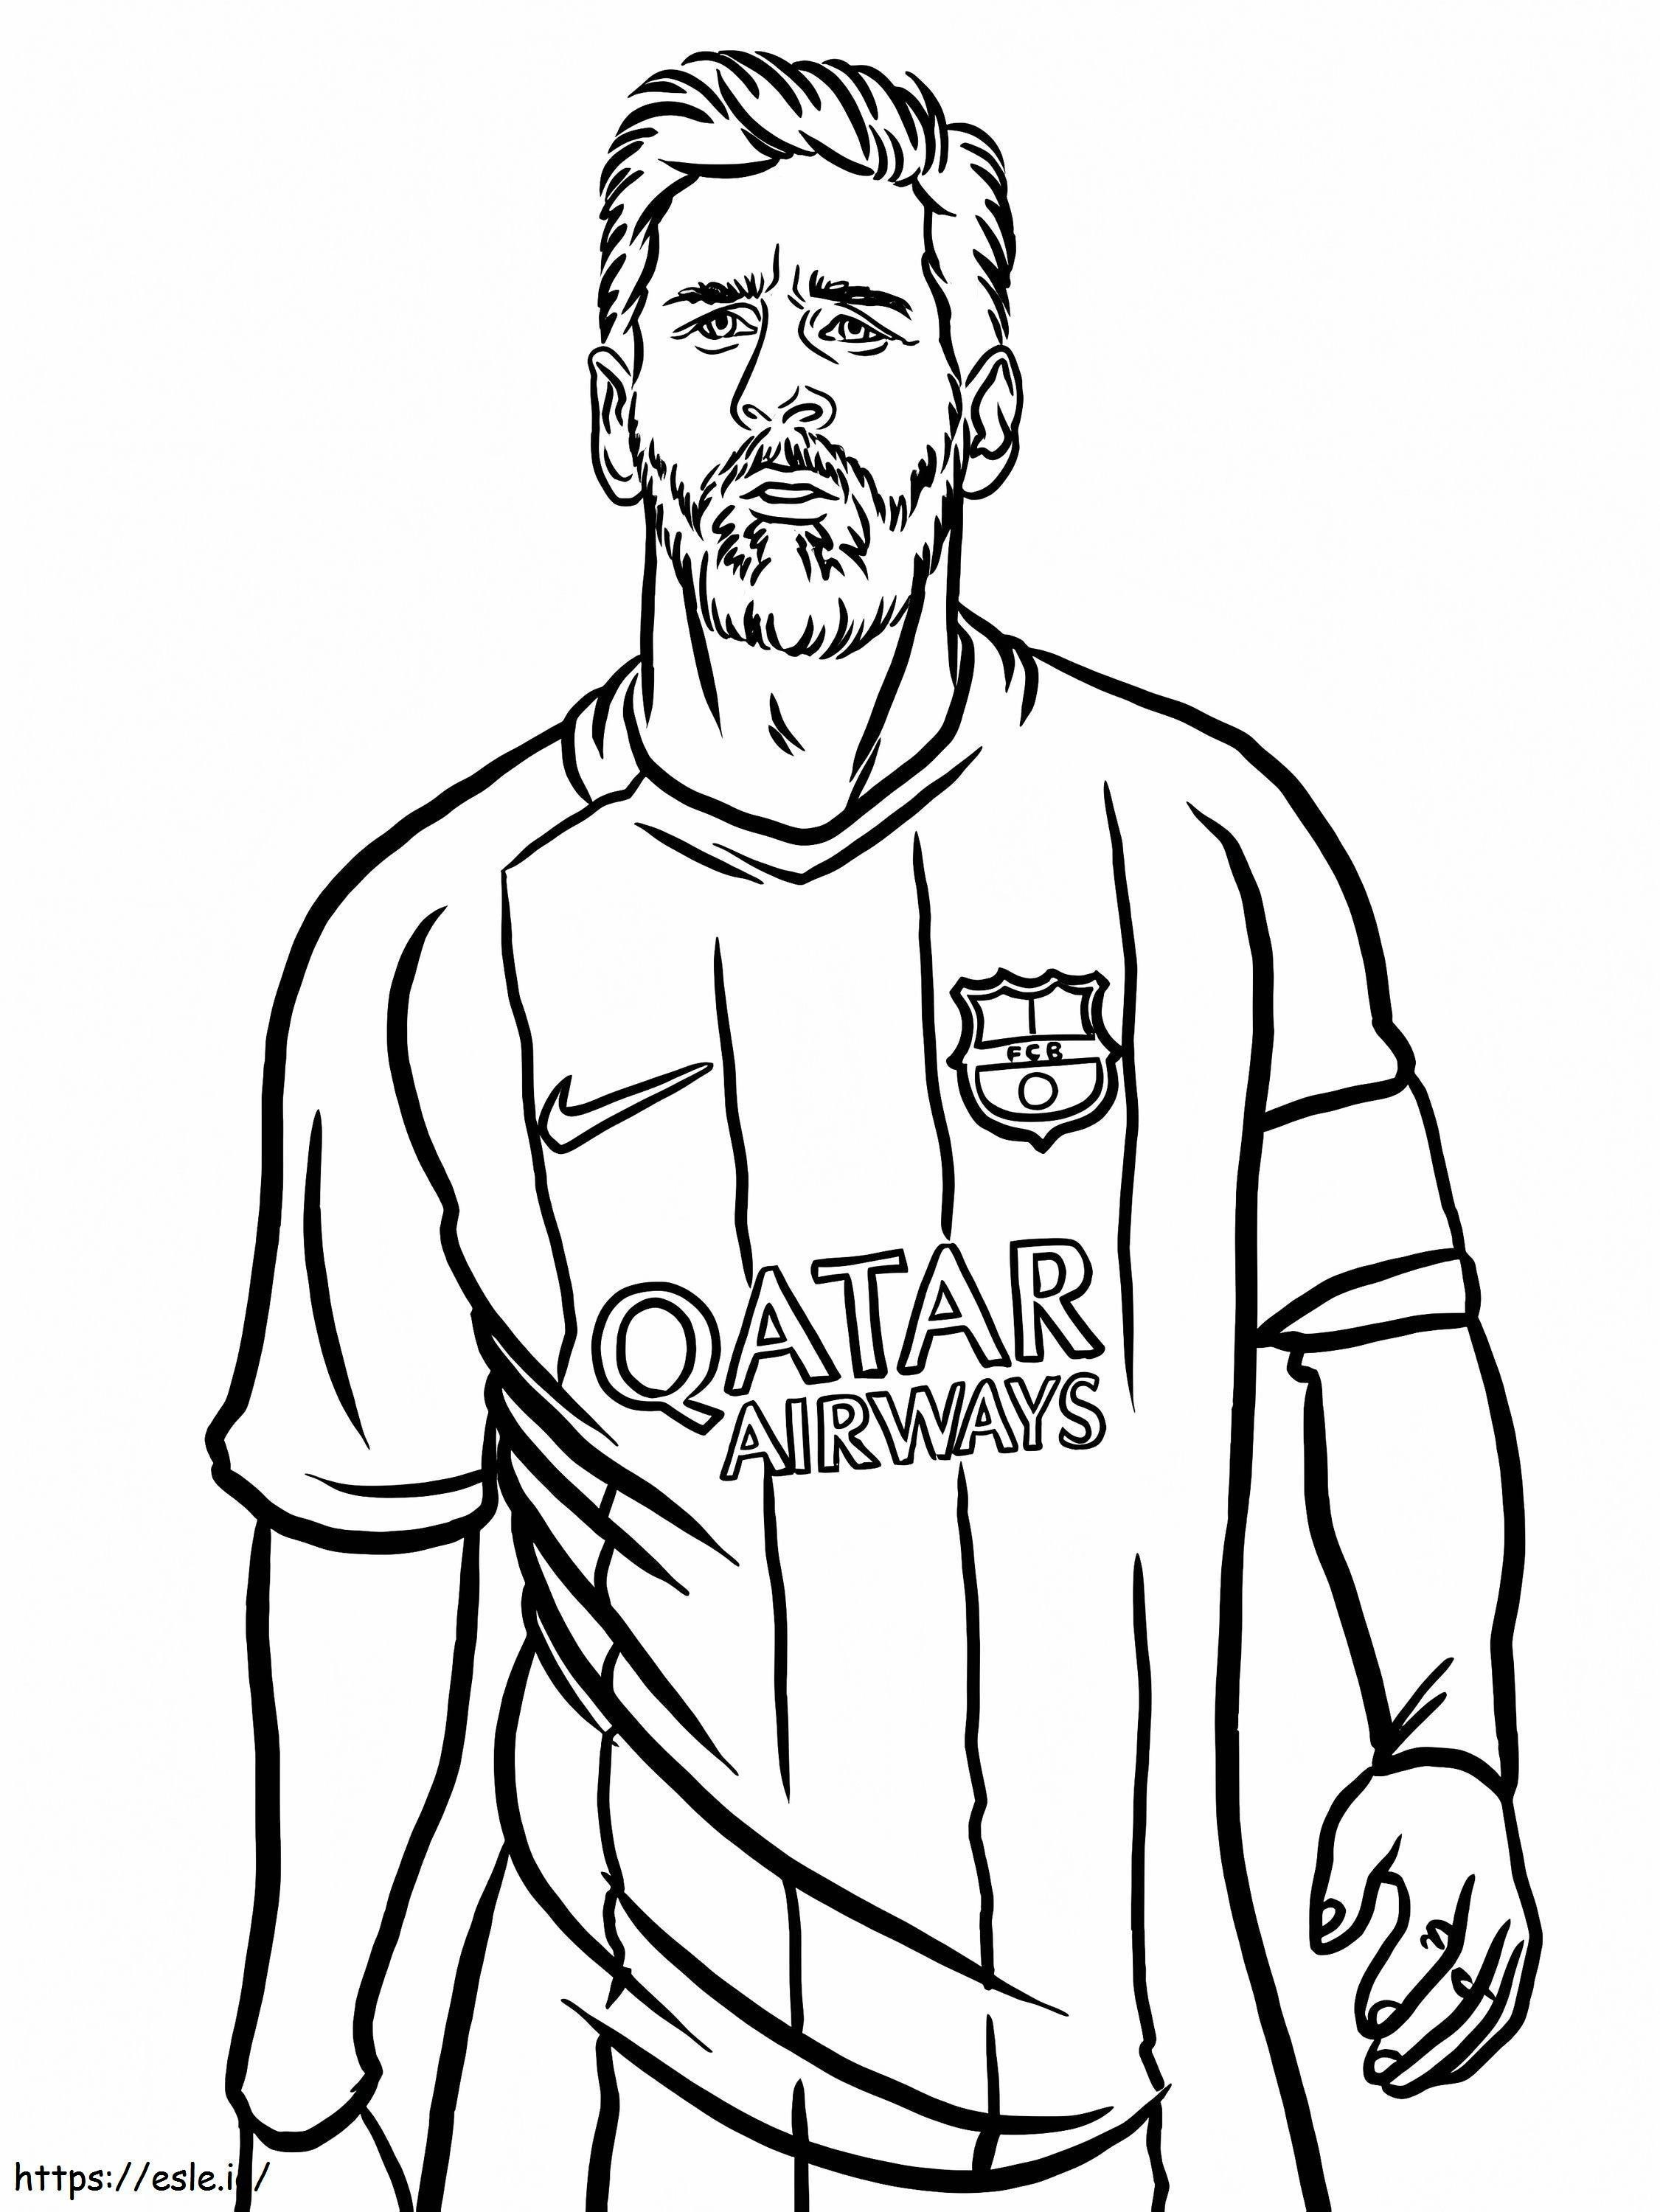 Portrait Of Lionel Messi coloring page